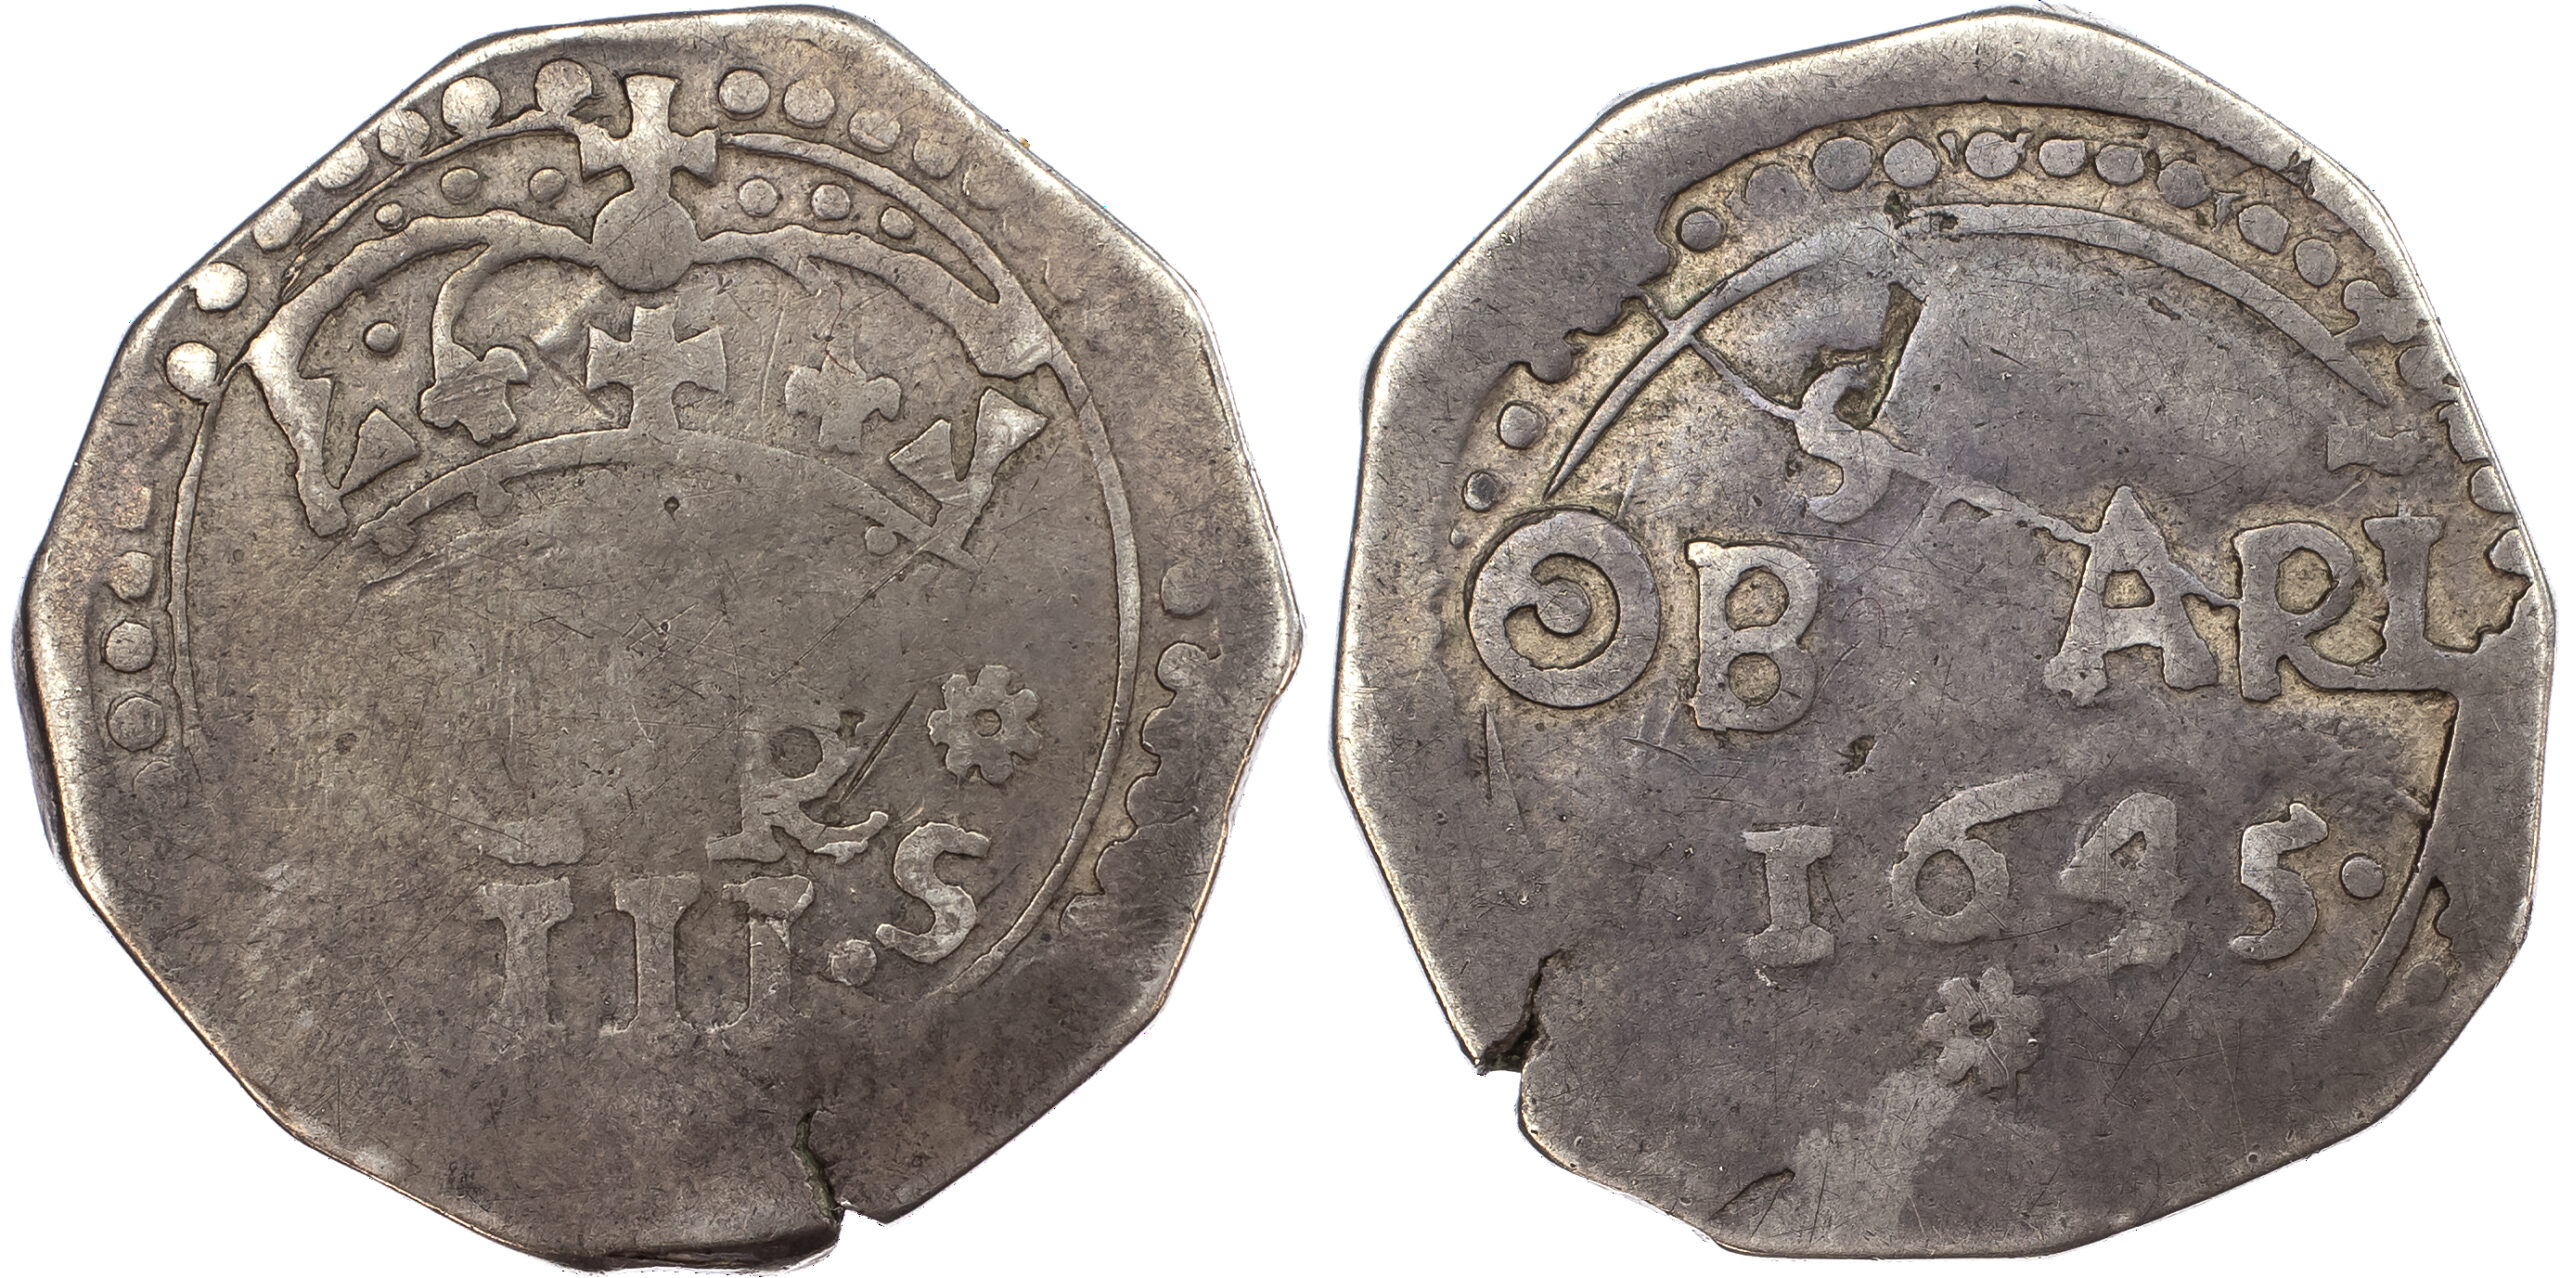 Charles I (1625-49), Three Shillings, 1645, Civil War obsidional coinage